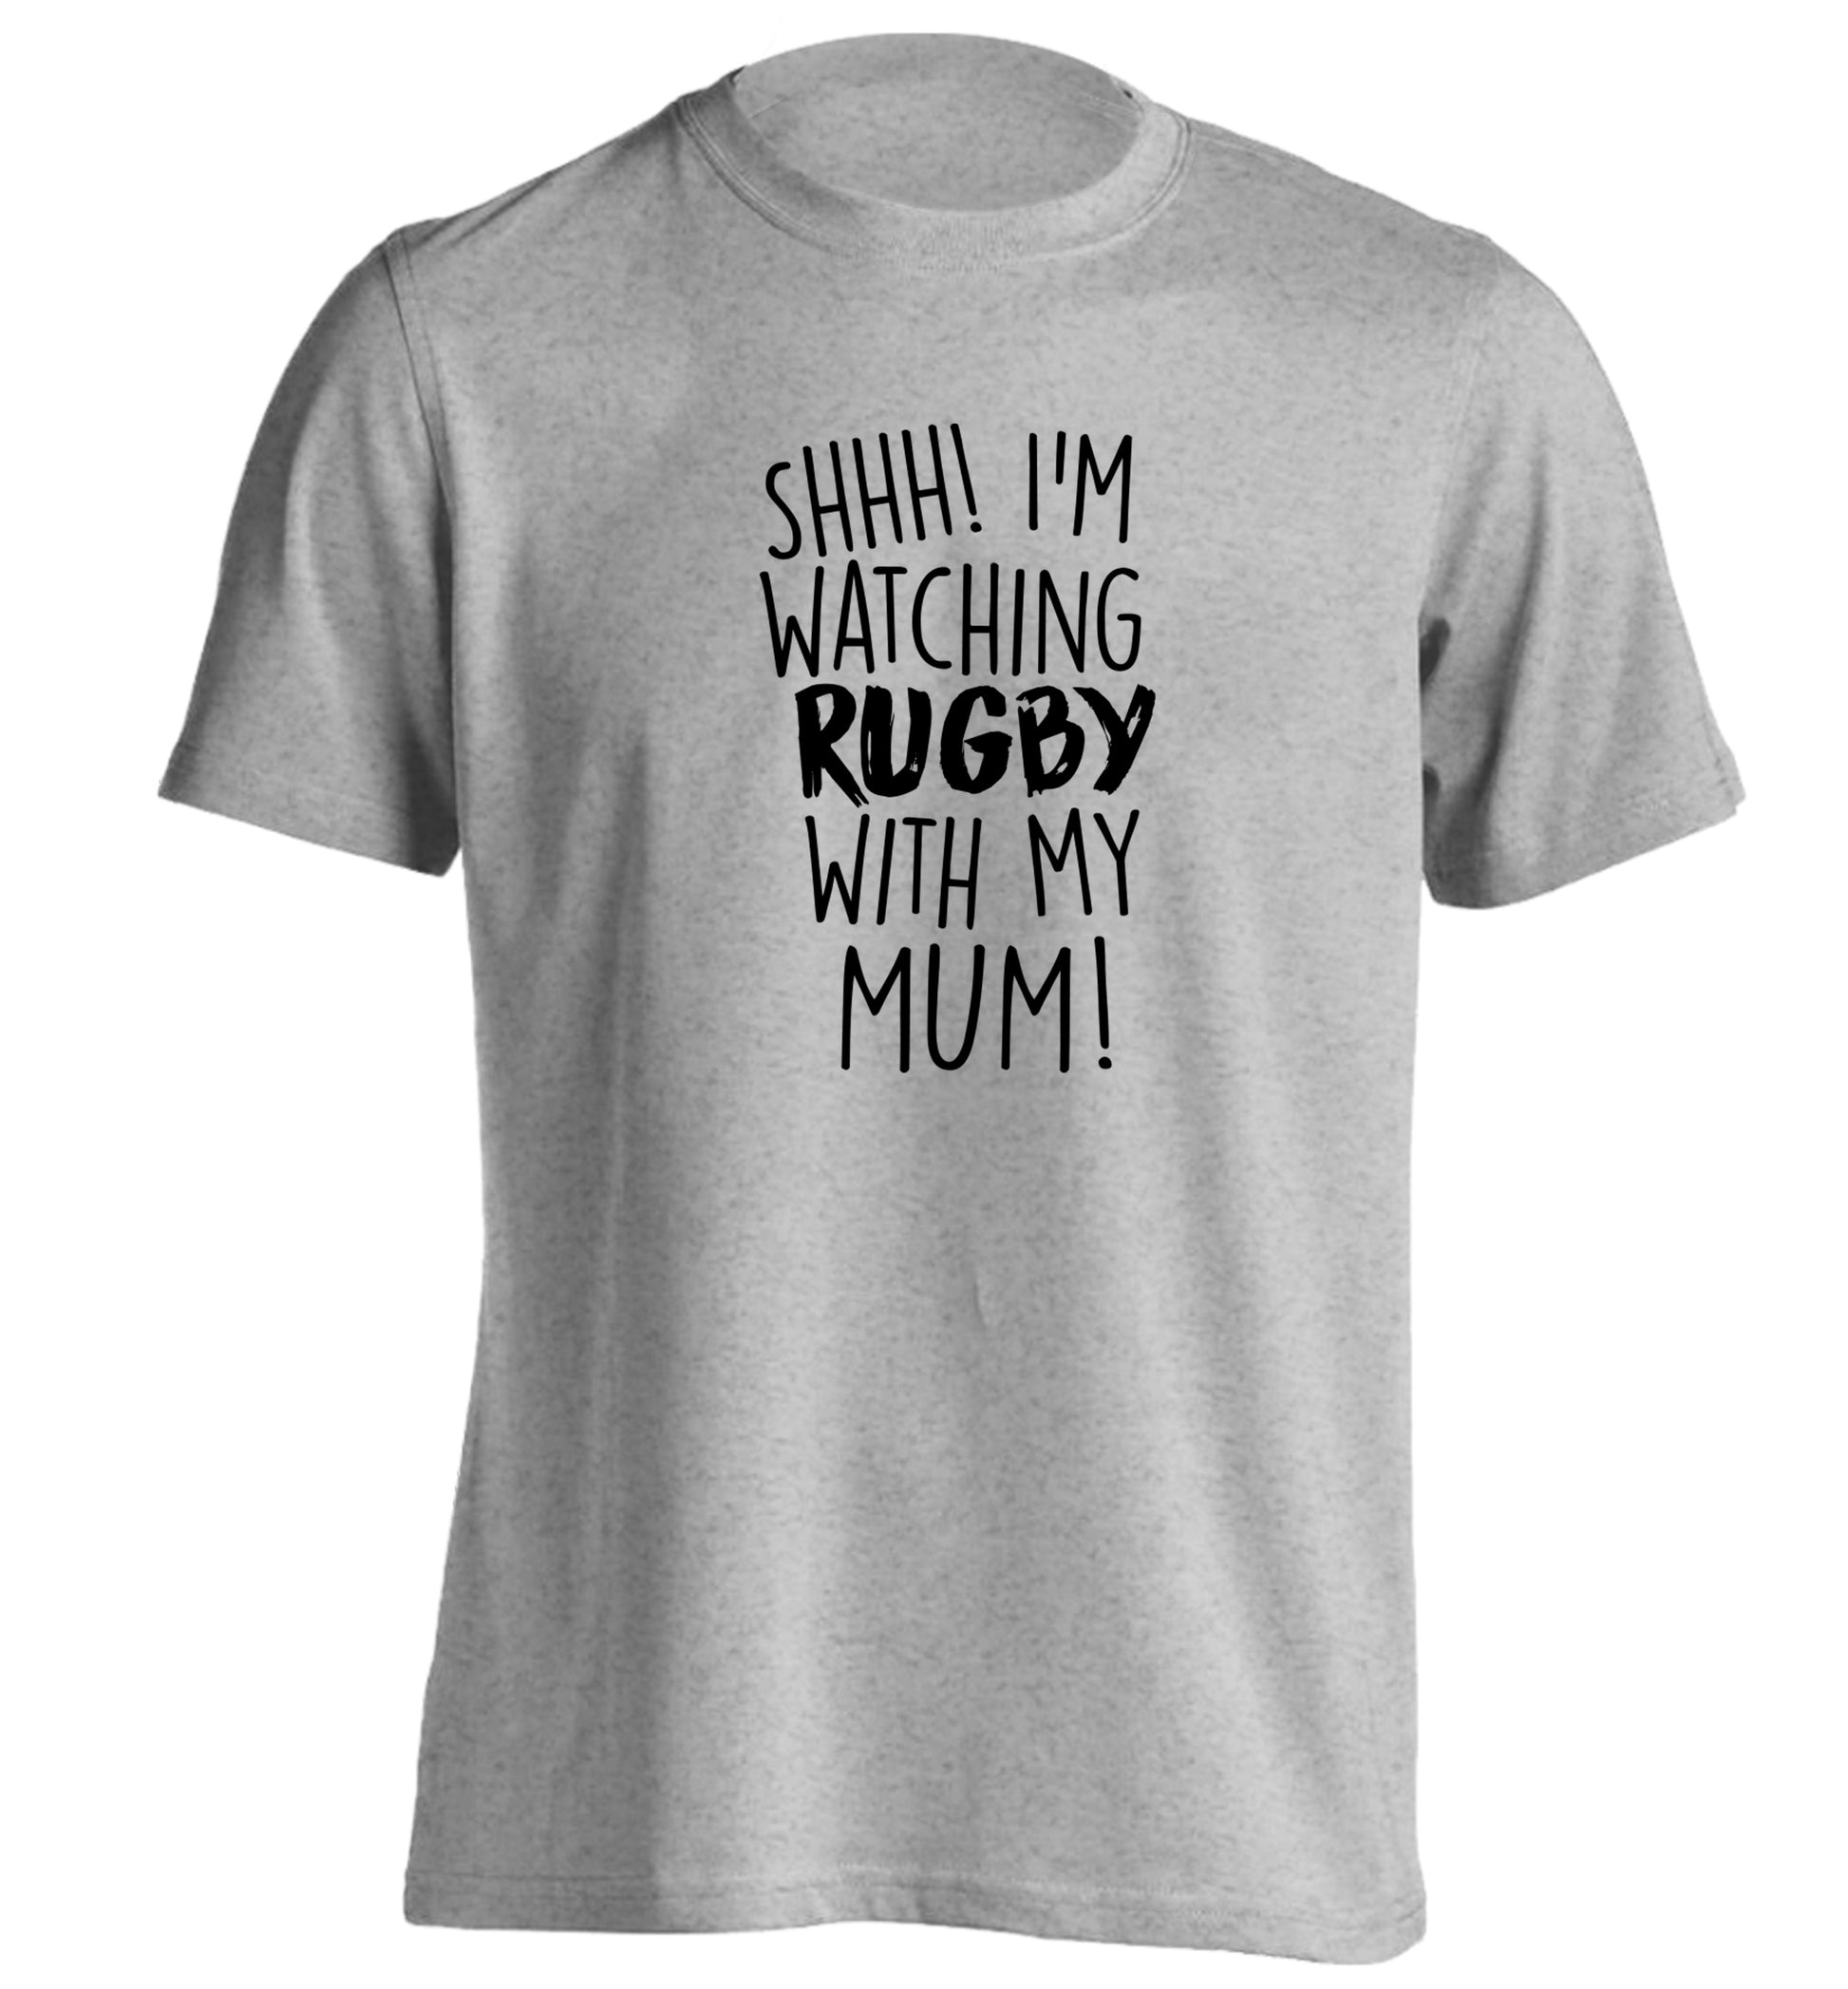 Shh... I'm watching rugby with my mum adults unisex grey Tshirt 2XL